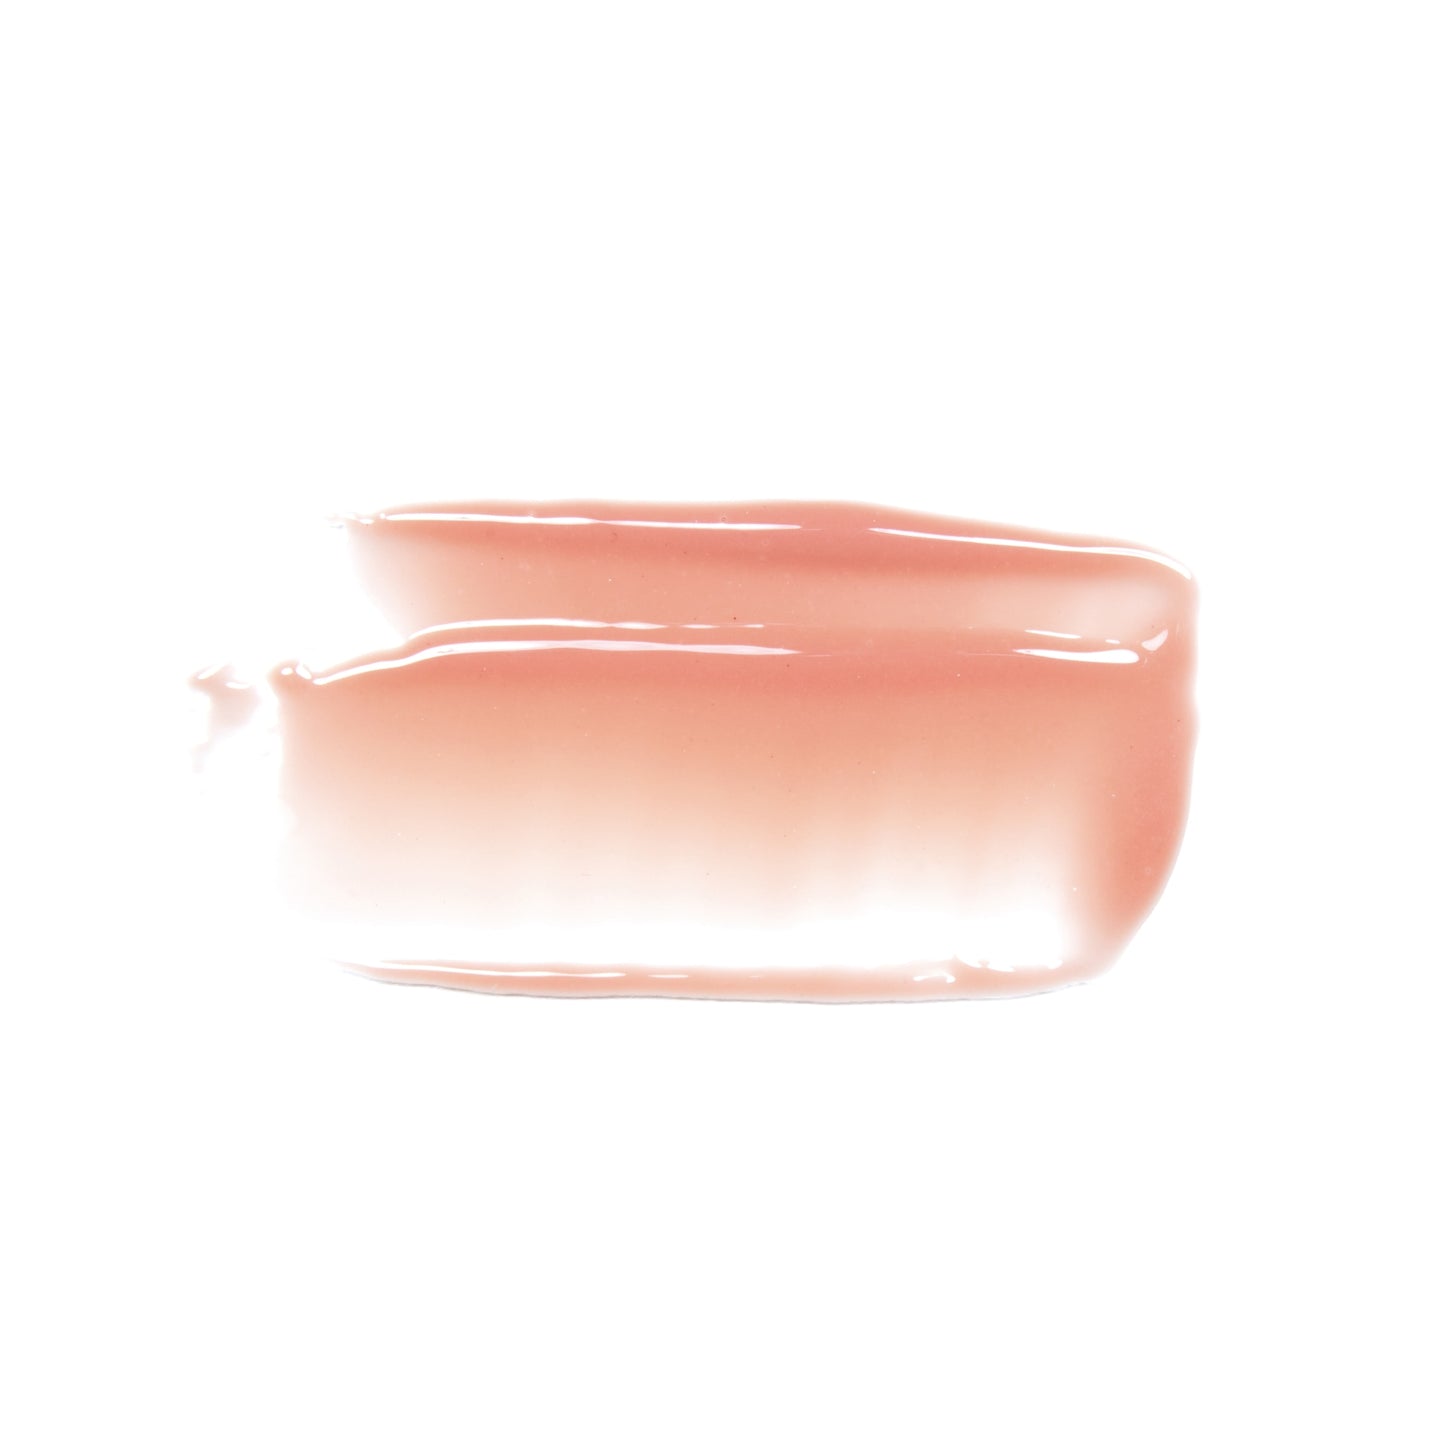 100% PURE Fruit Pigmented Lip Gloss pink caramel